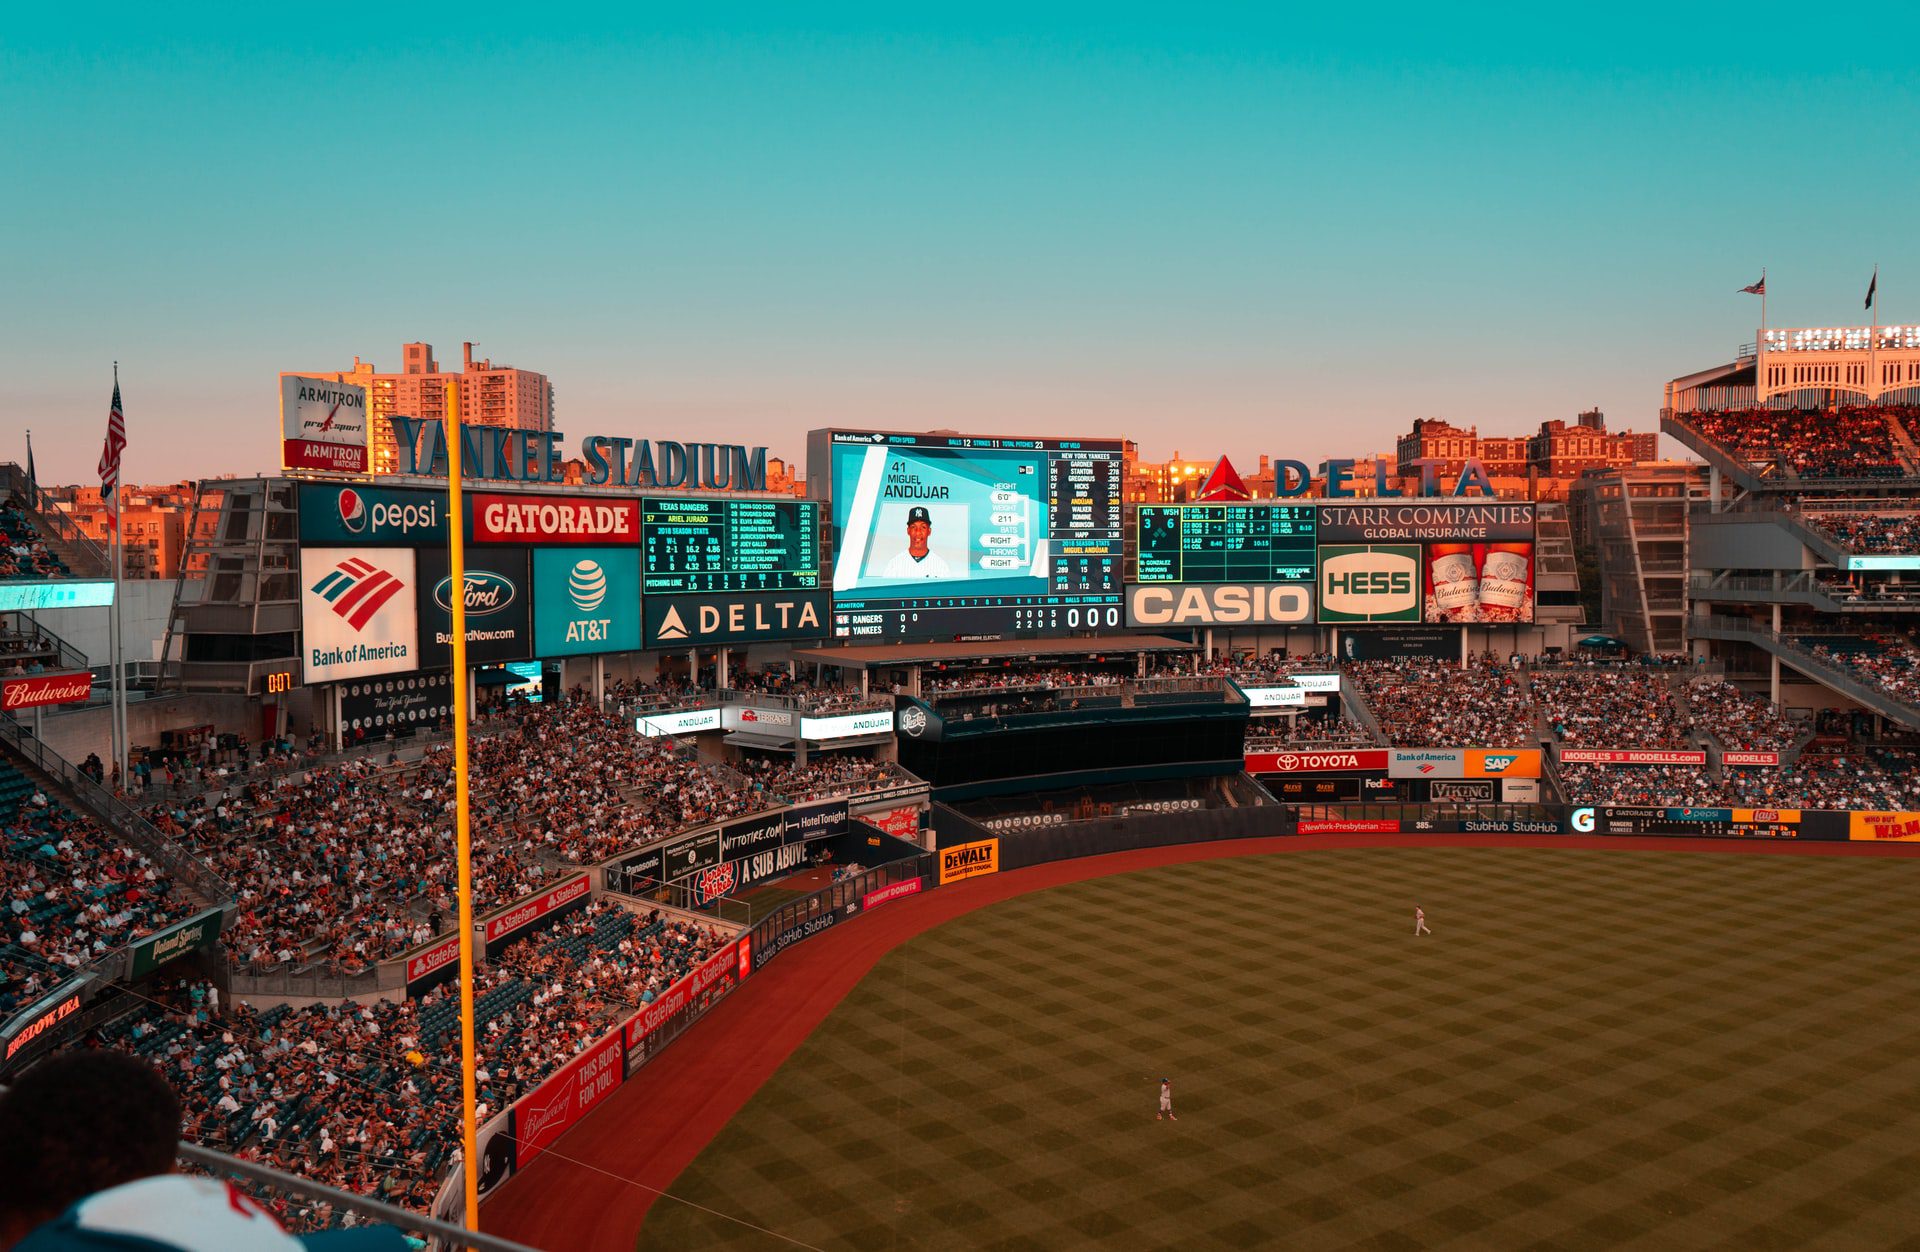 New York Yankees stadium for a baseball game